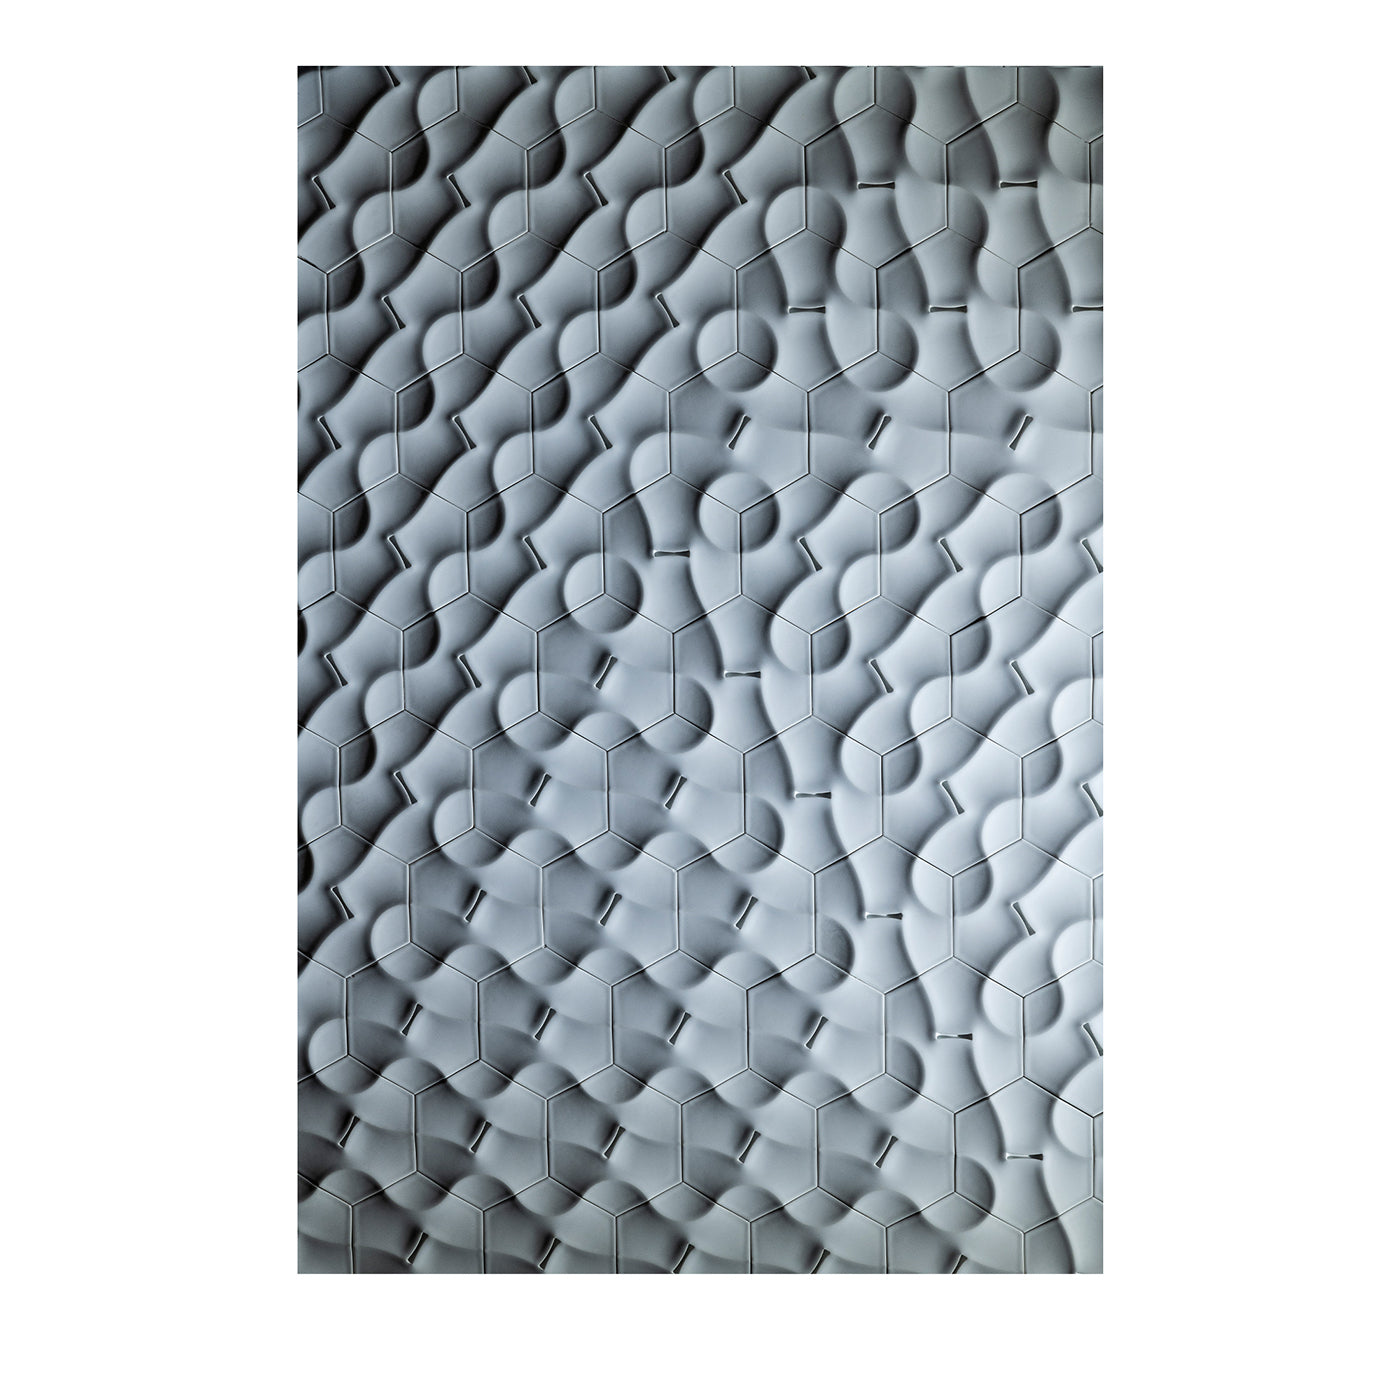 CADENZA Tiles by Kejun Li #3 - Main view